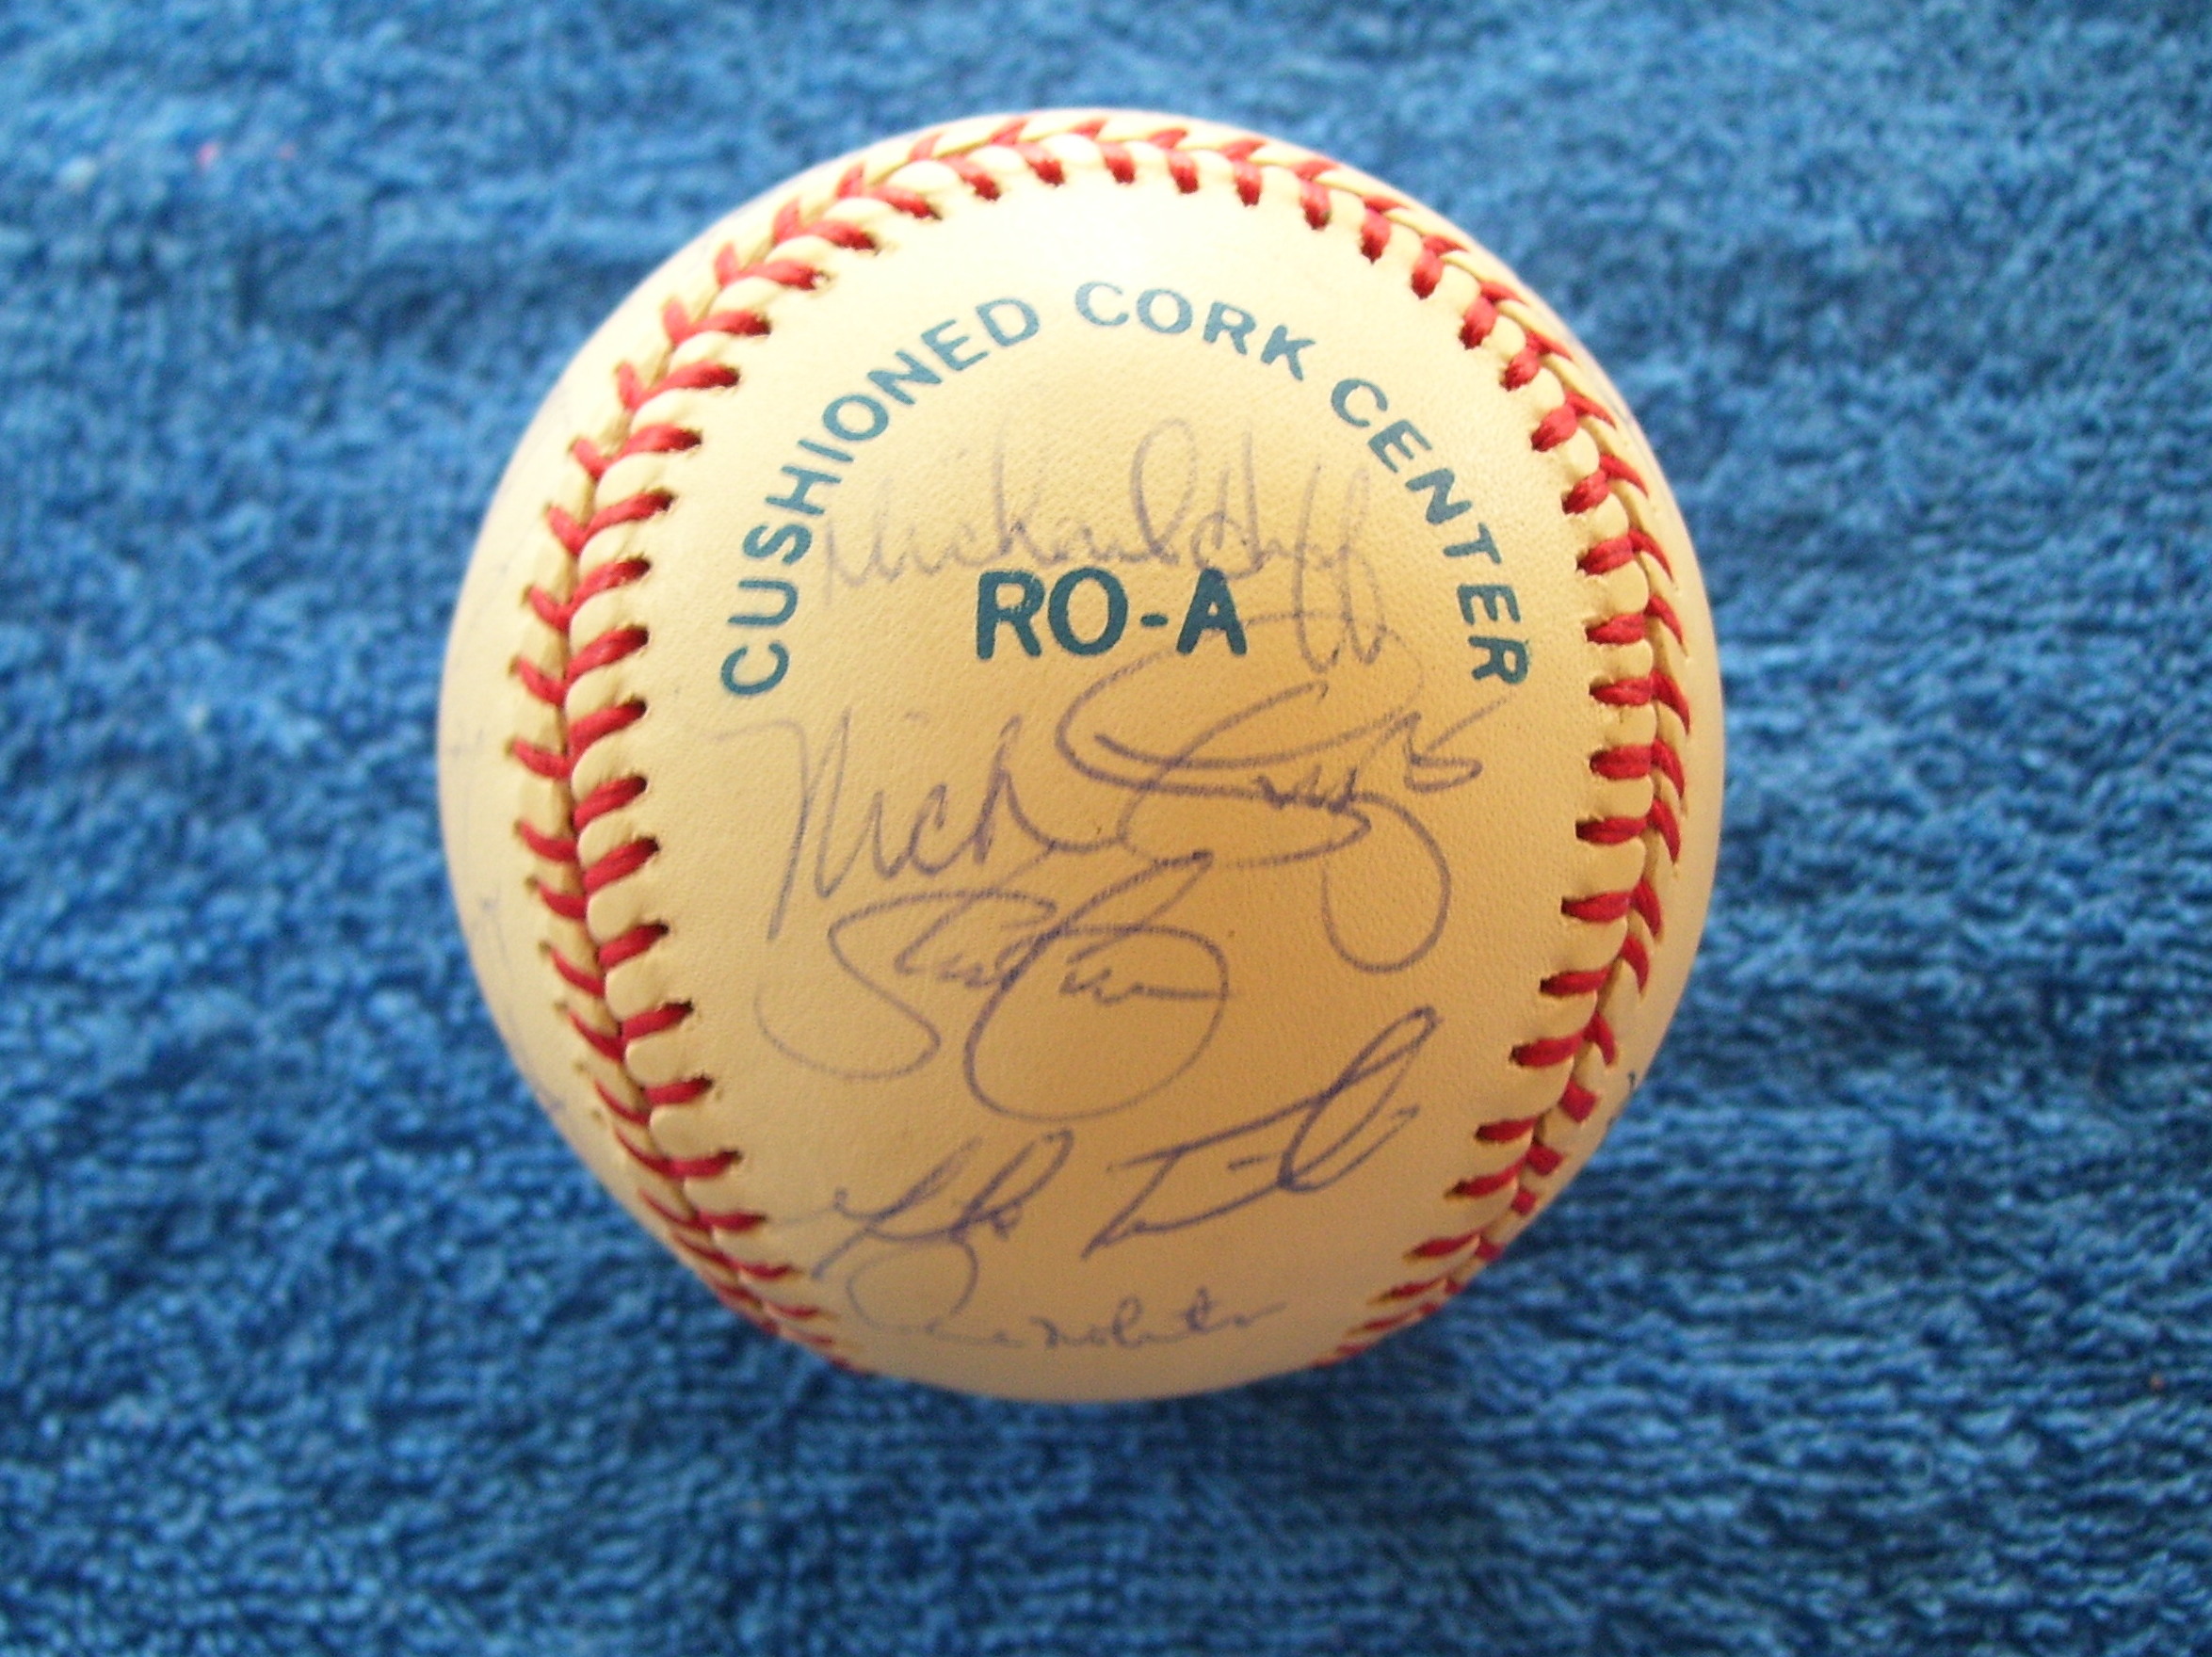   1995 Blue Jays - Team Signed/AUTOGRAPHED baseball [#10c] 27 Signatures Baseball cards value